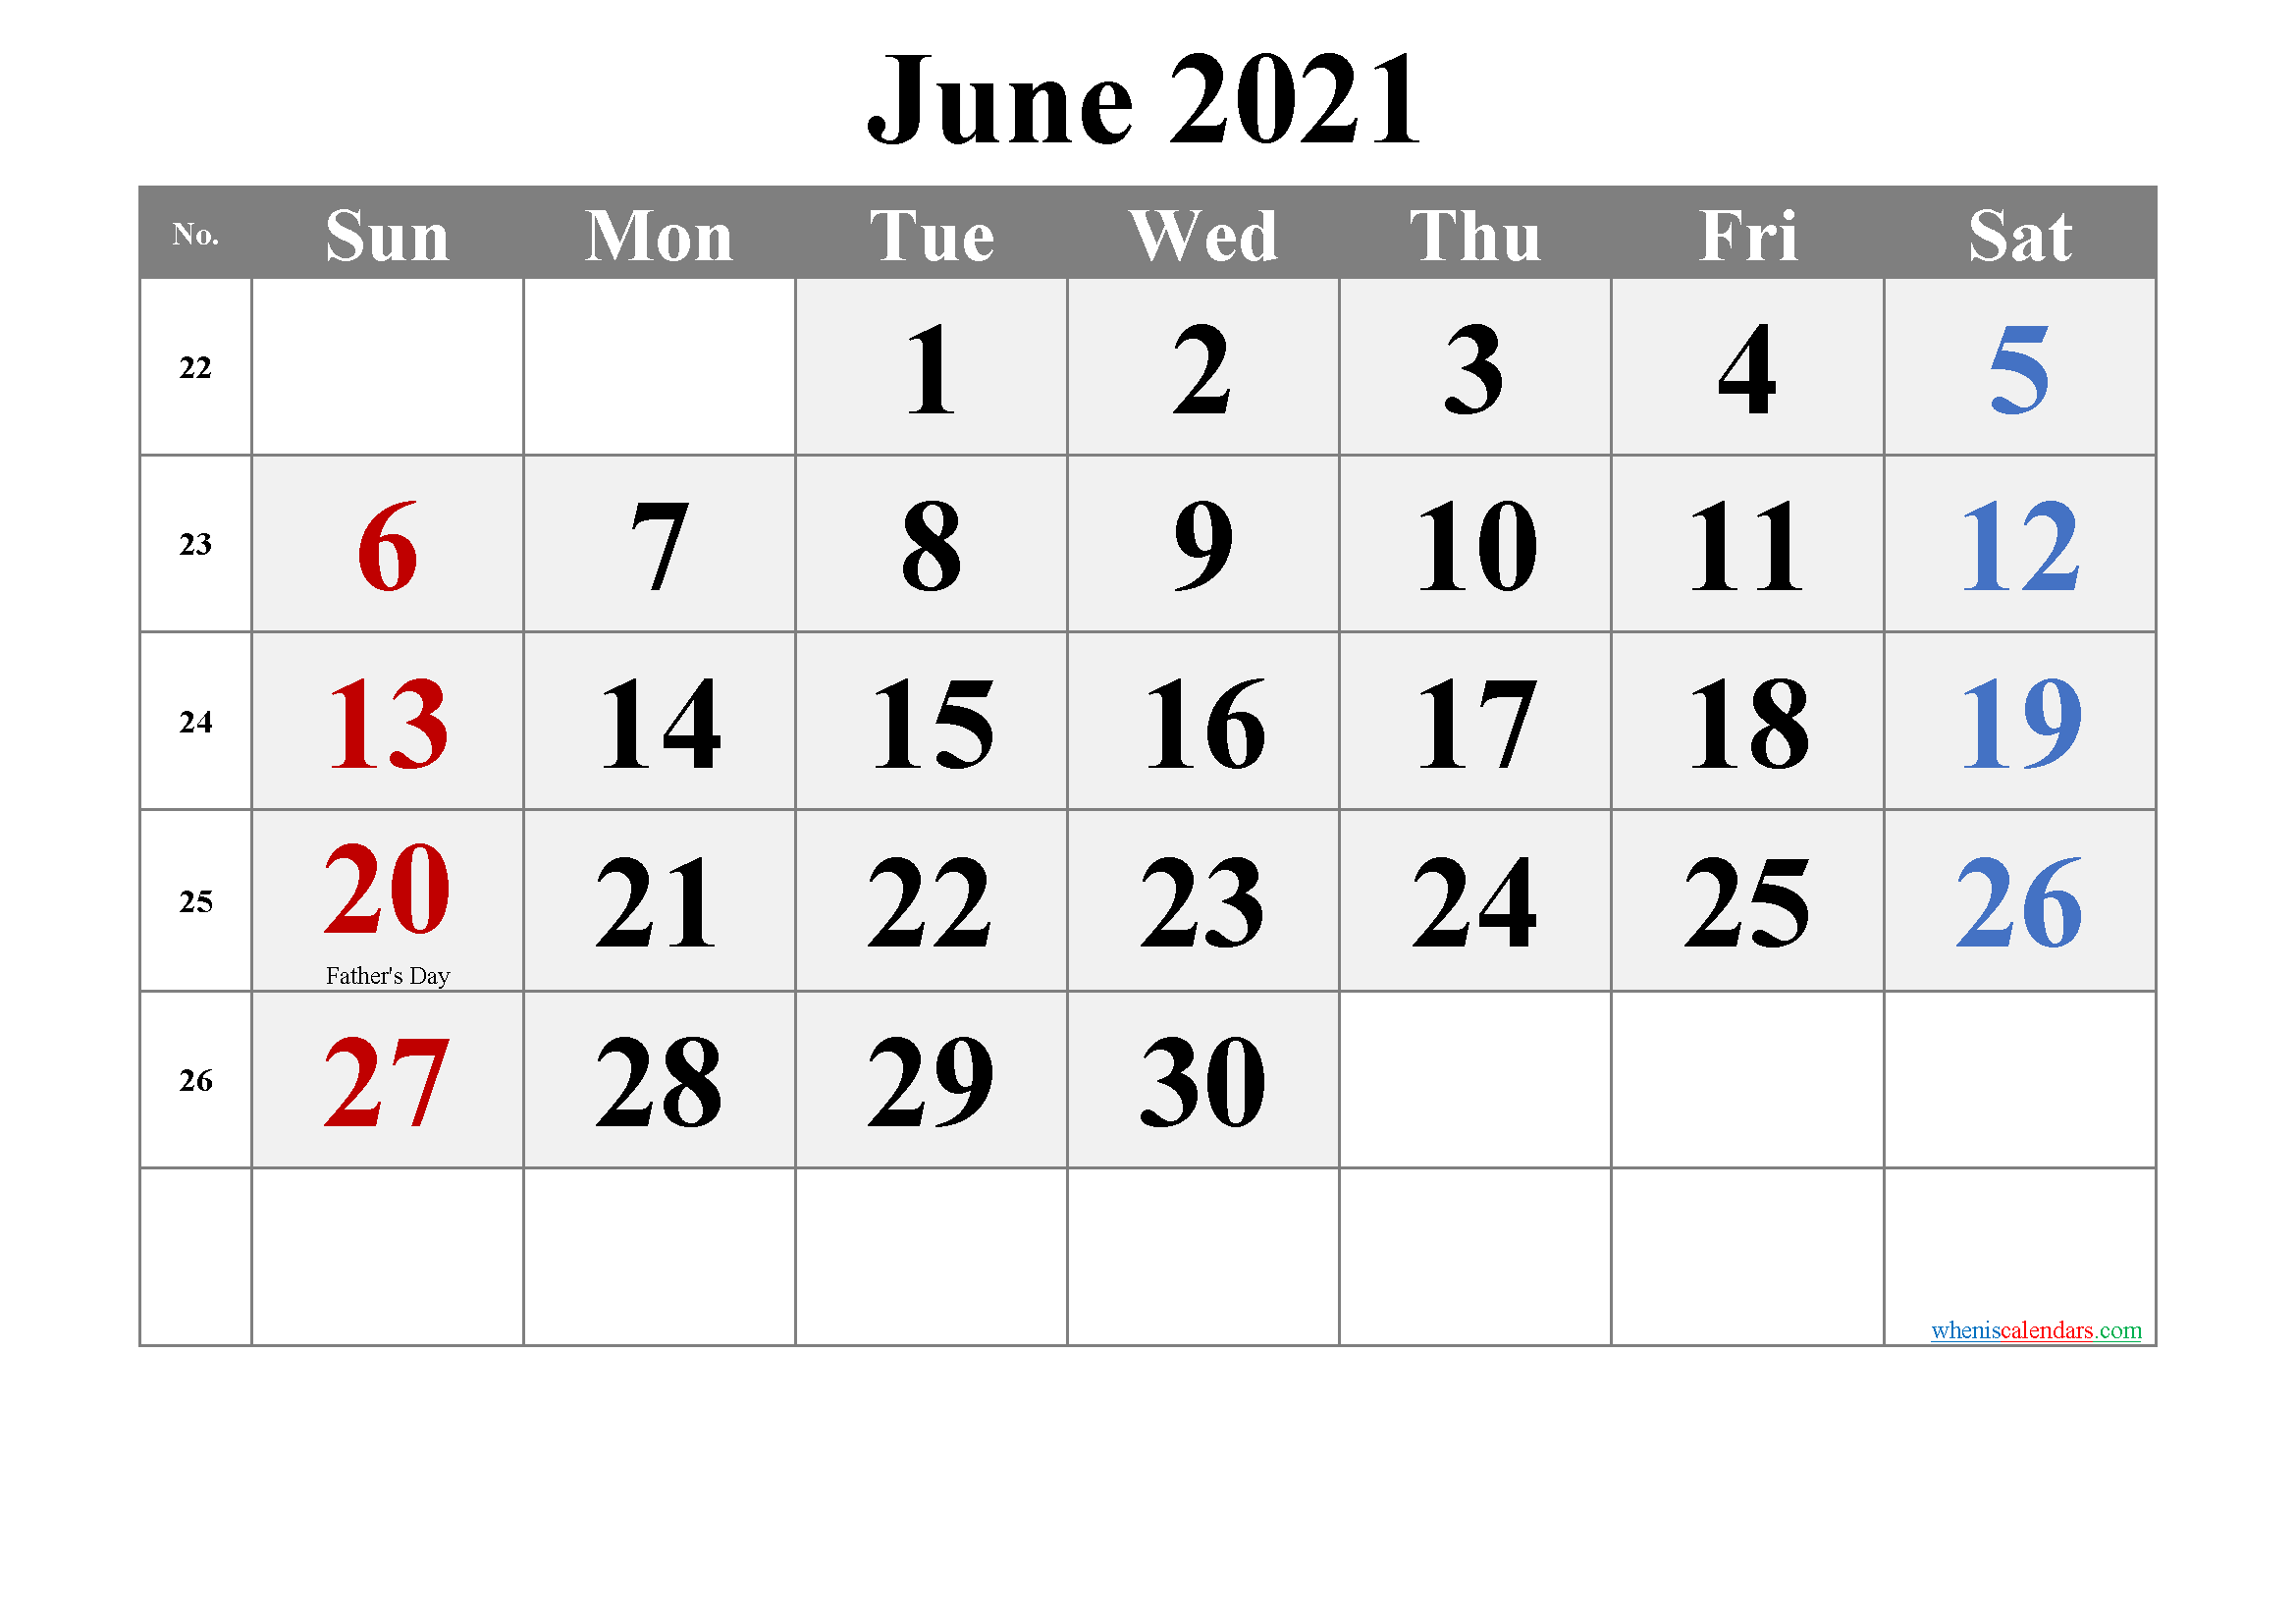 JUNE 2021 Printable Calendar with Holidays